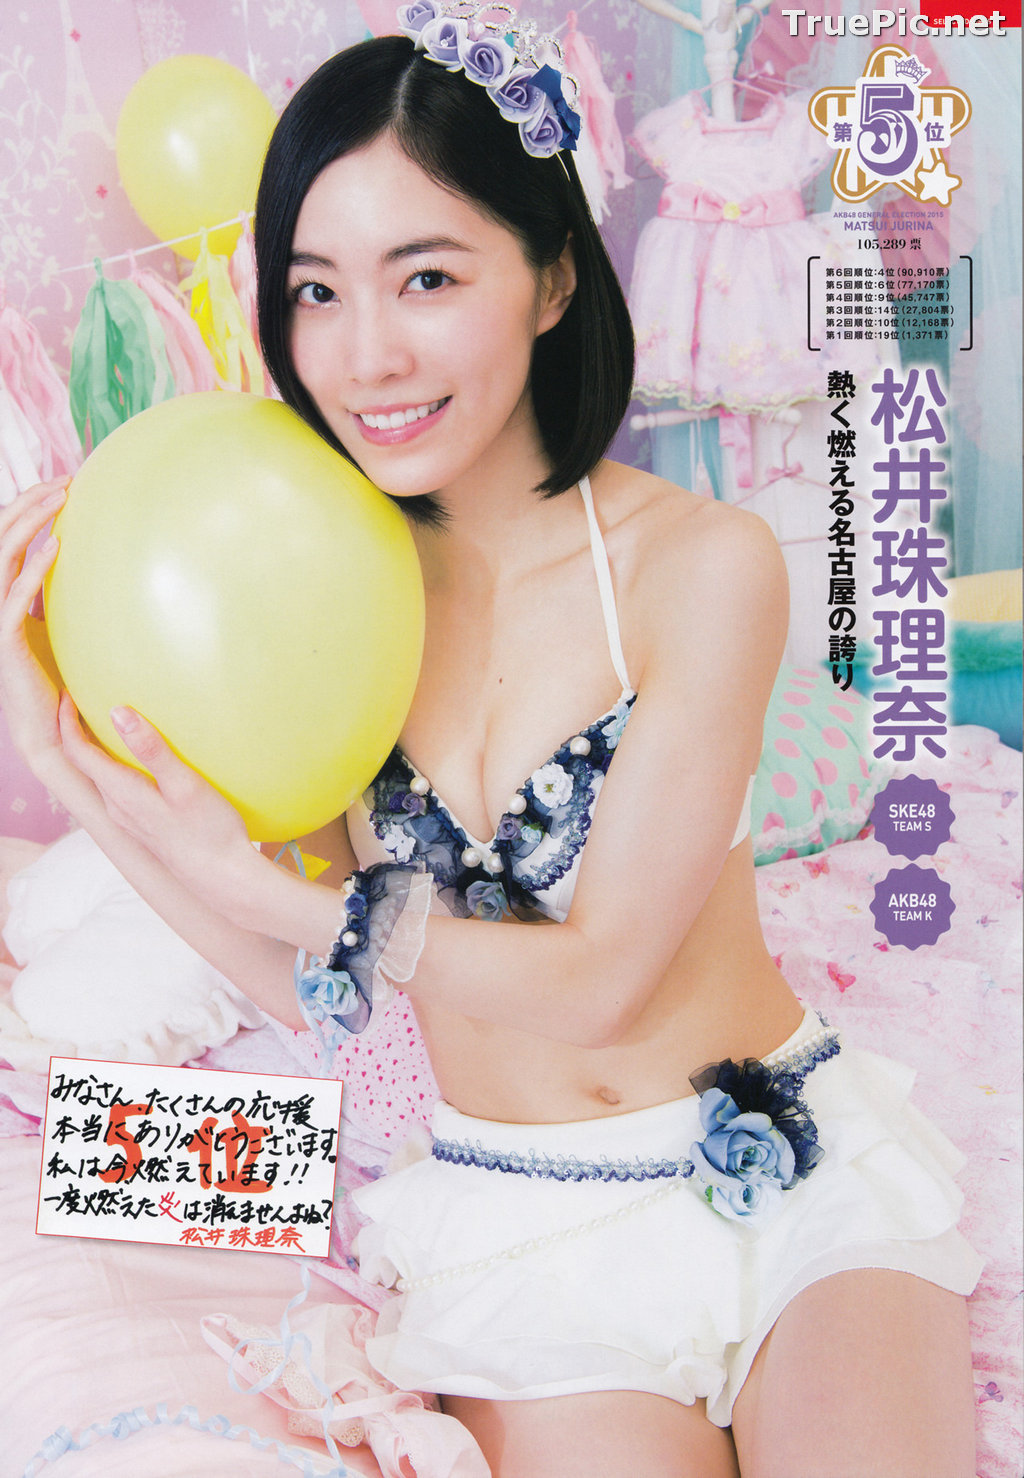 Image AKB48 General Election! Swimsuit Surprise Announcement 2015 - TruePic.net - Picture-22